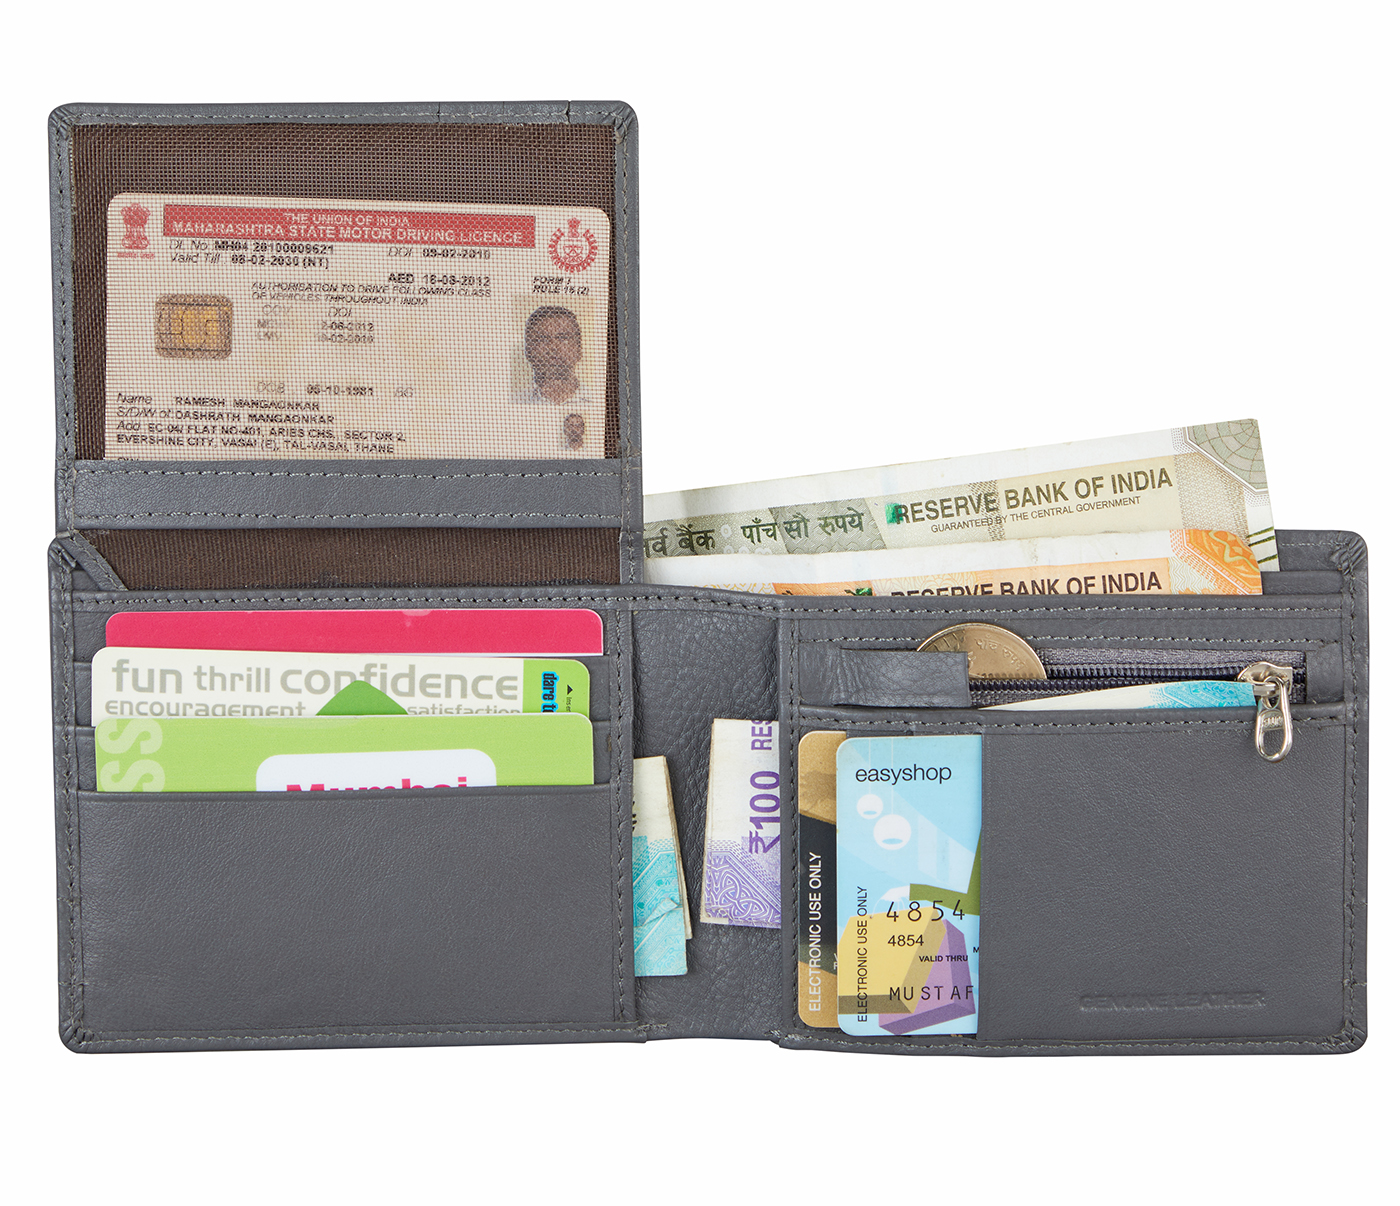 W364-Pedro Mens bifold wallet in genuine- - Grey